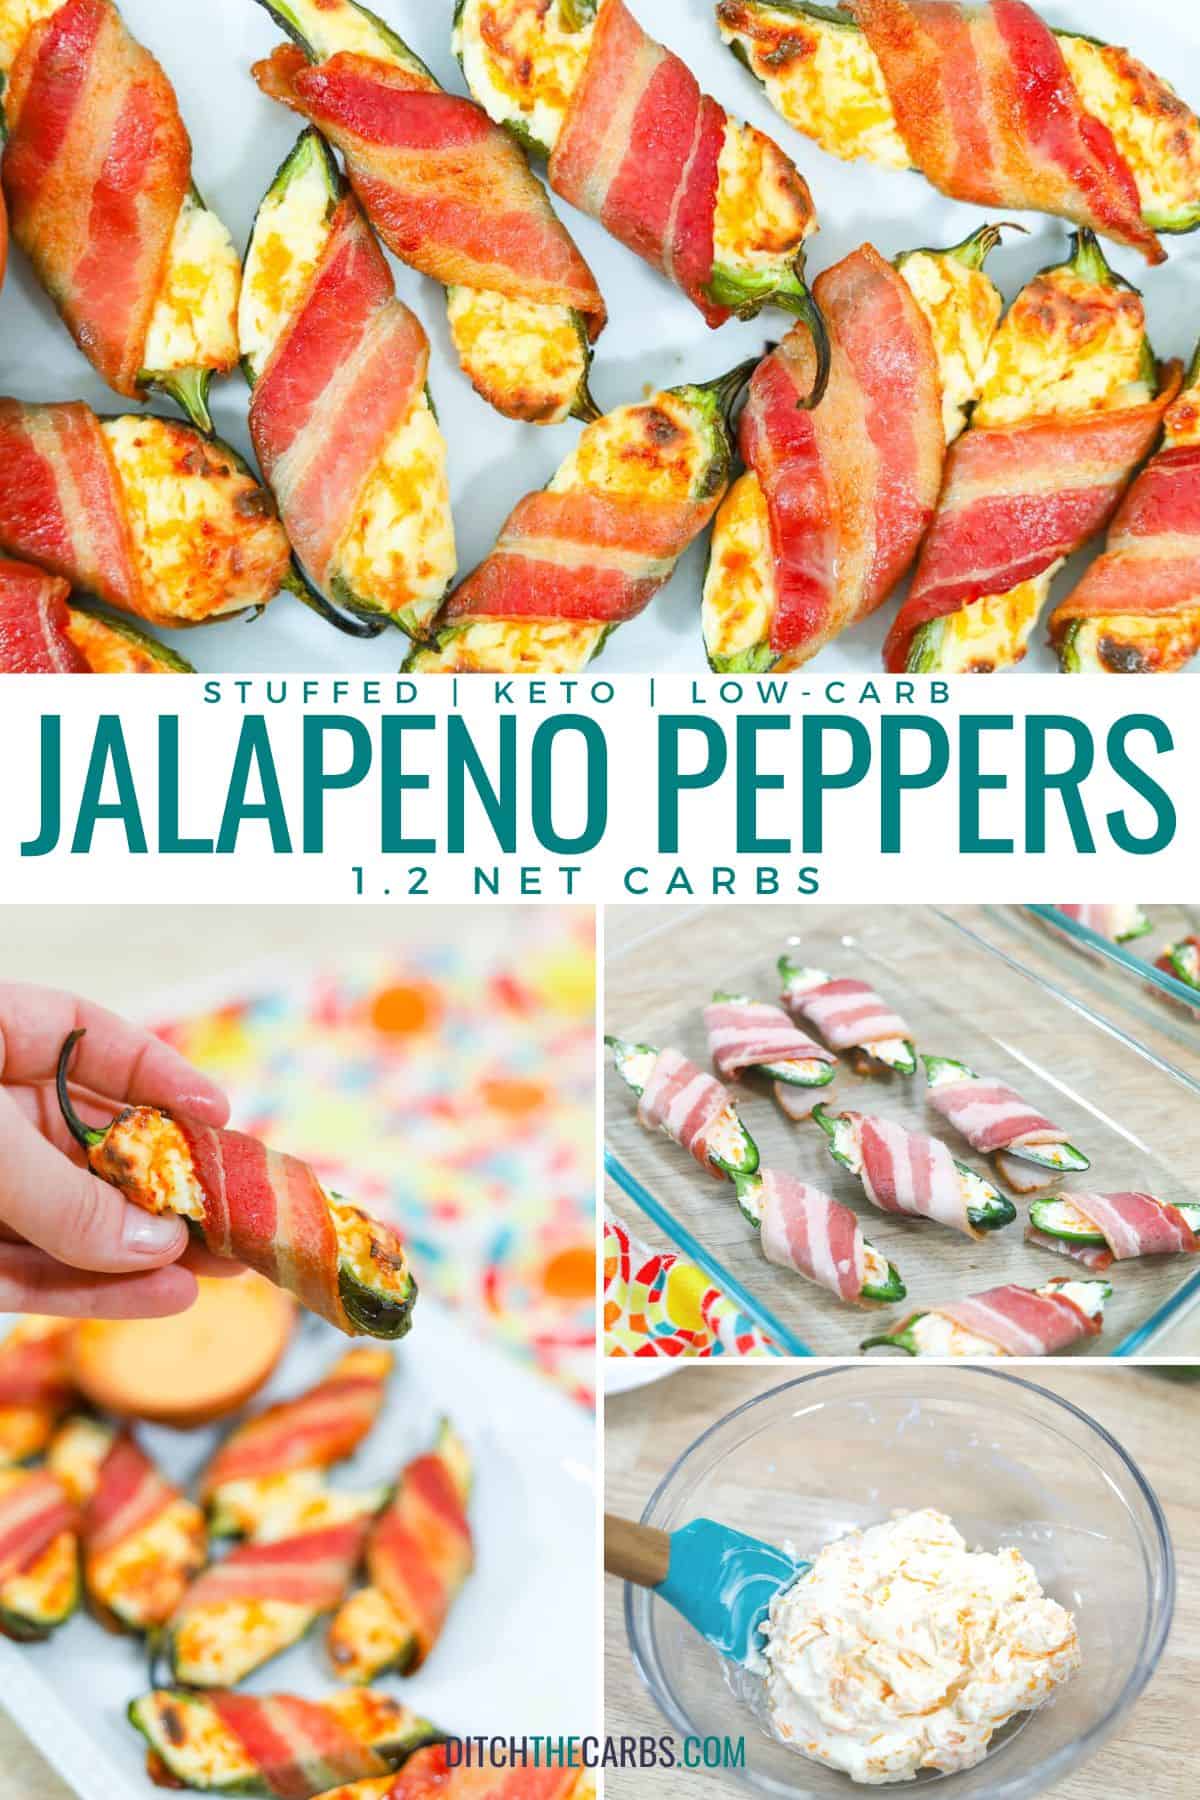 Stuffed jalapeno peppers